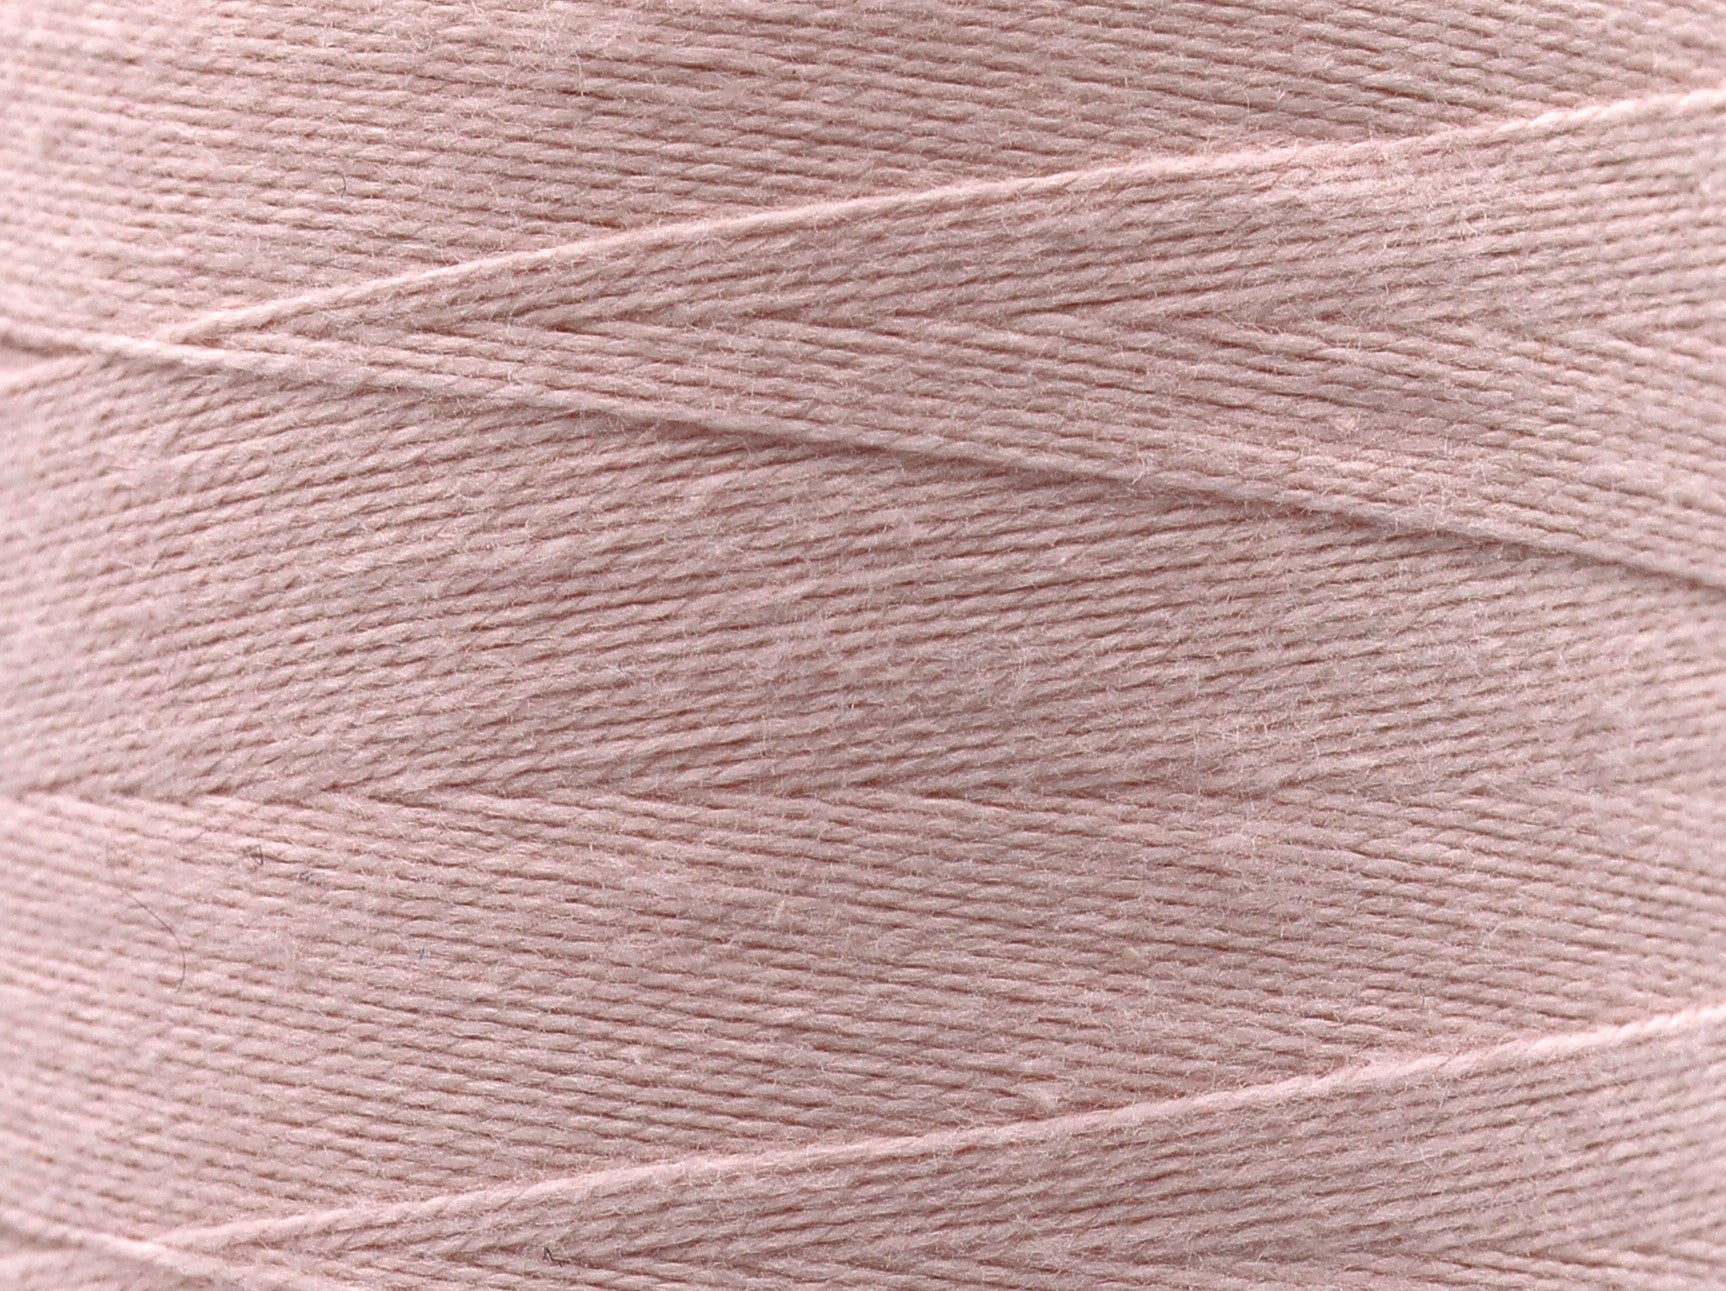 100% coton 2/16 - 100% Cotton Yarn